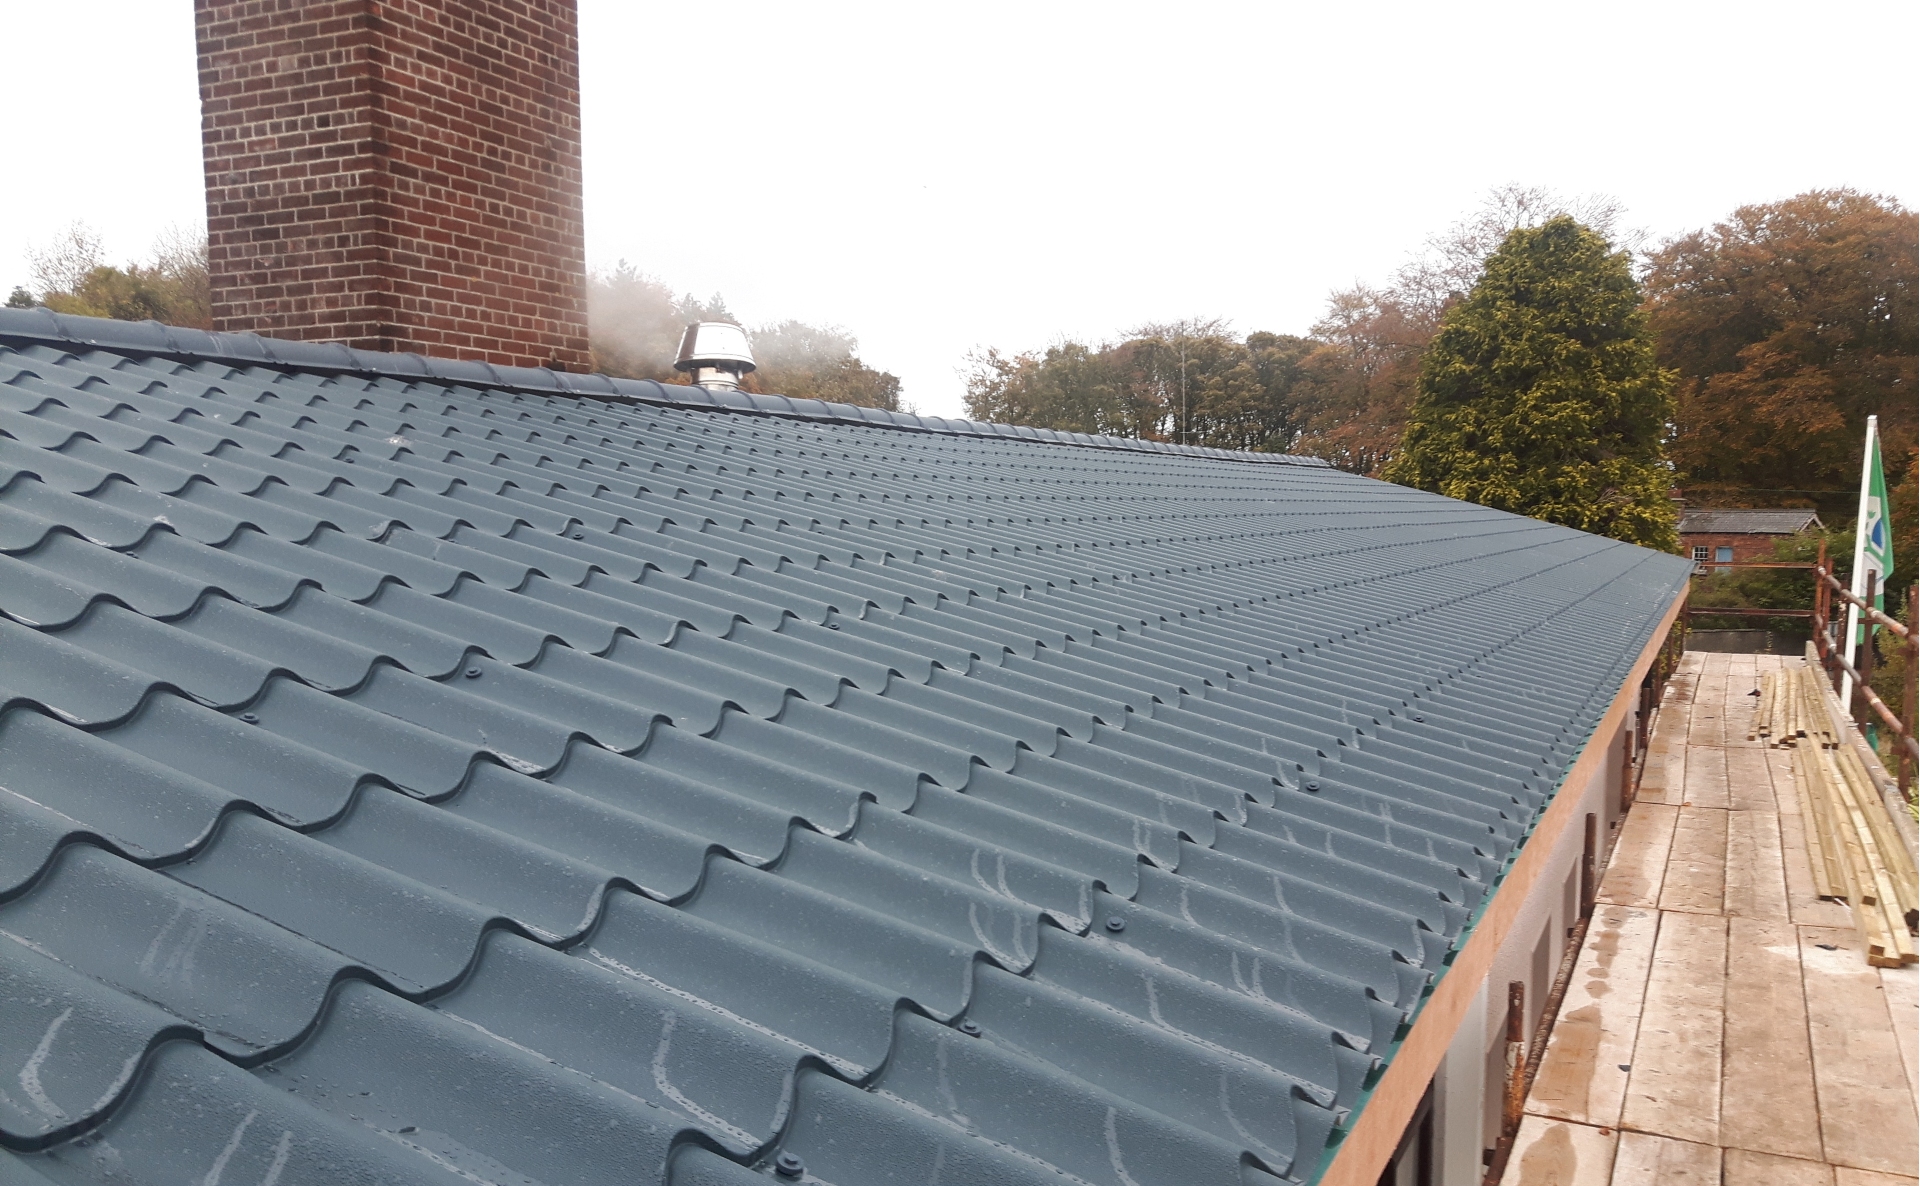 Nordman Tilesheet - the tile effect roof sheeting